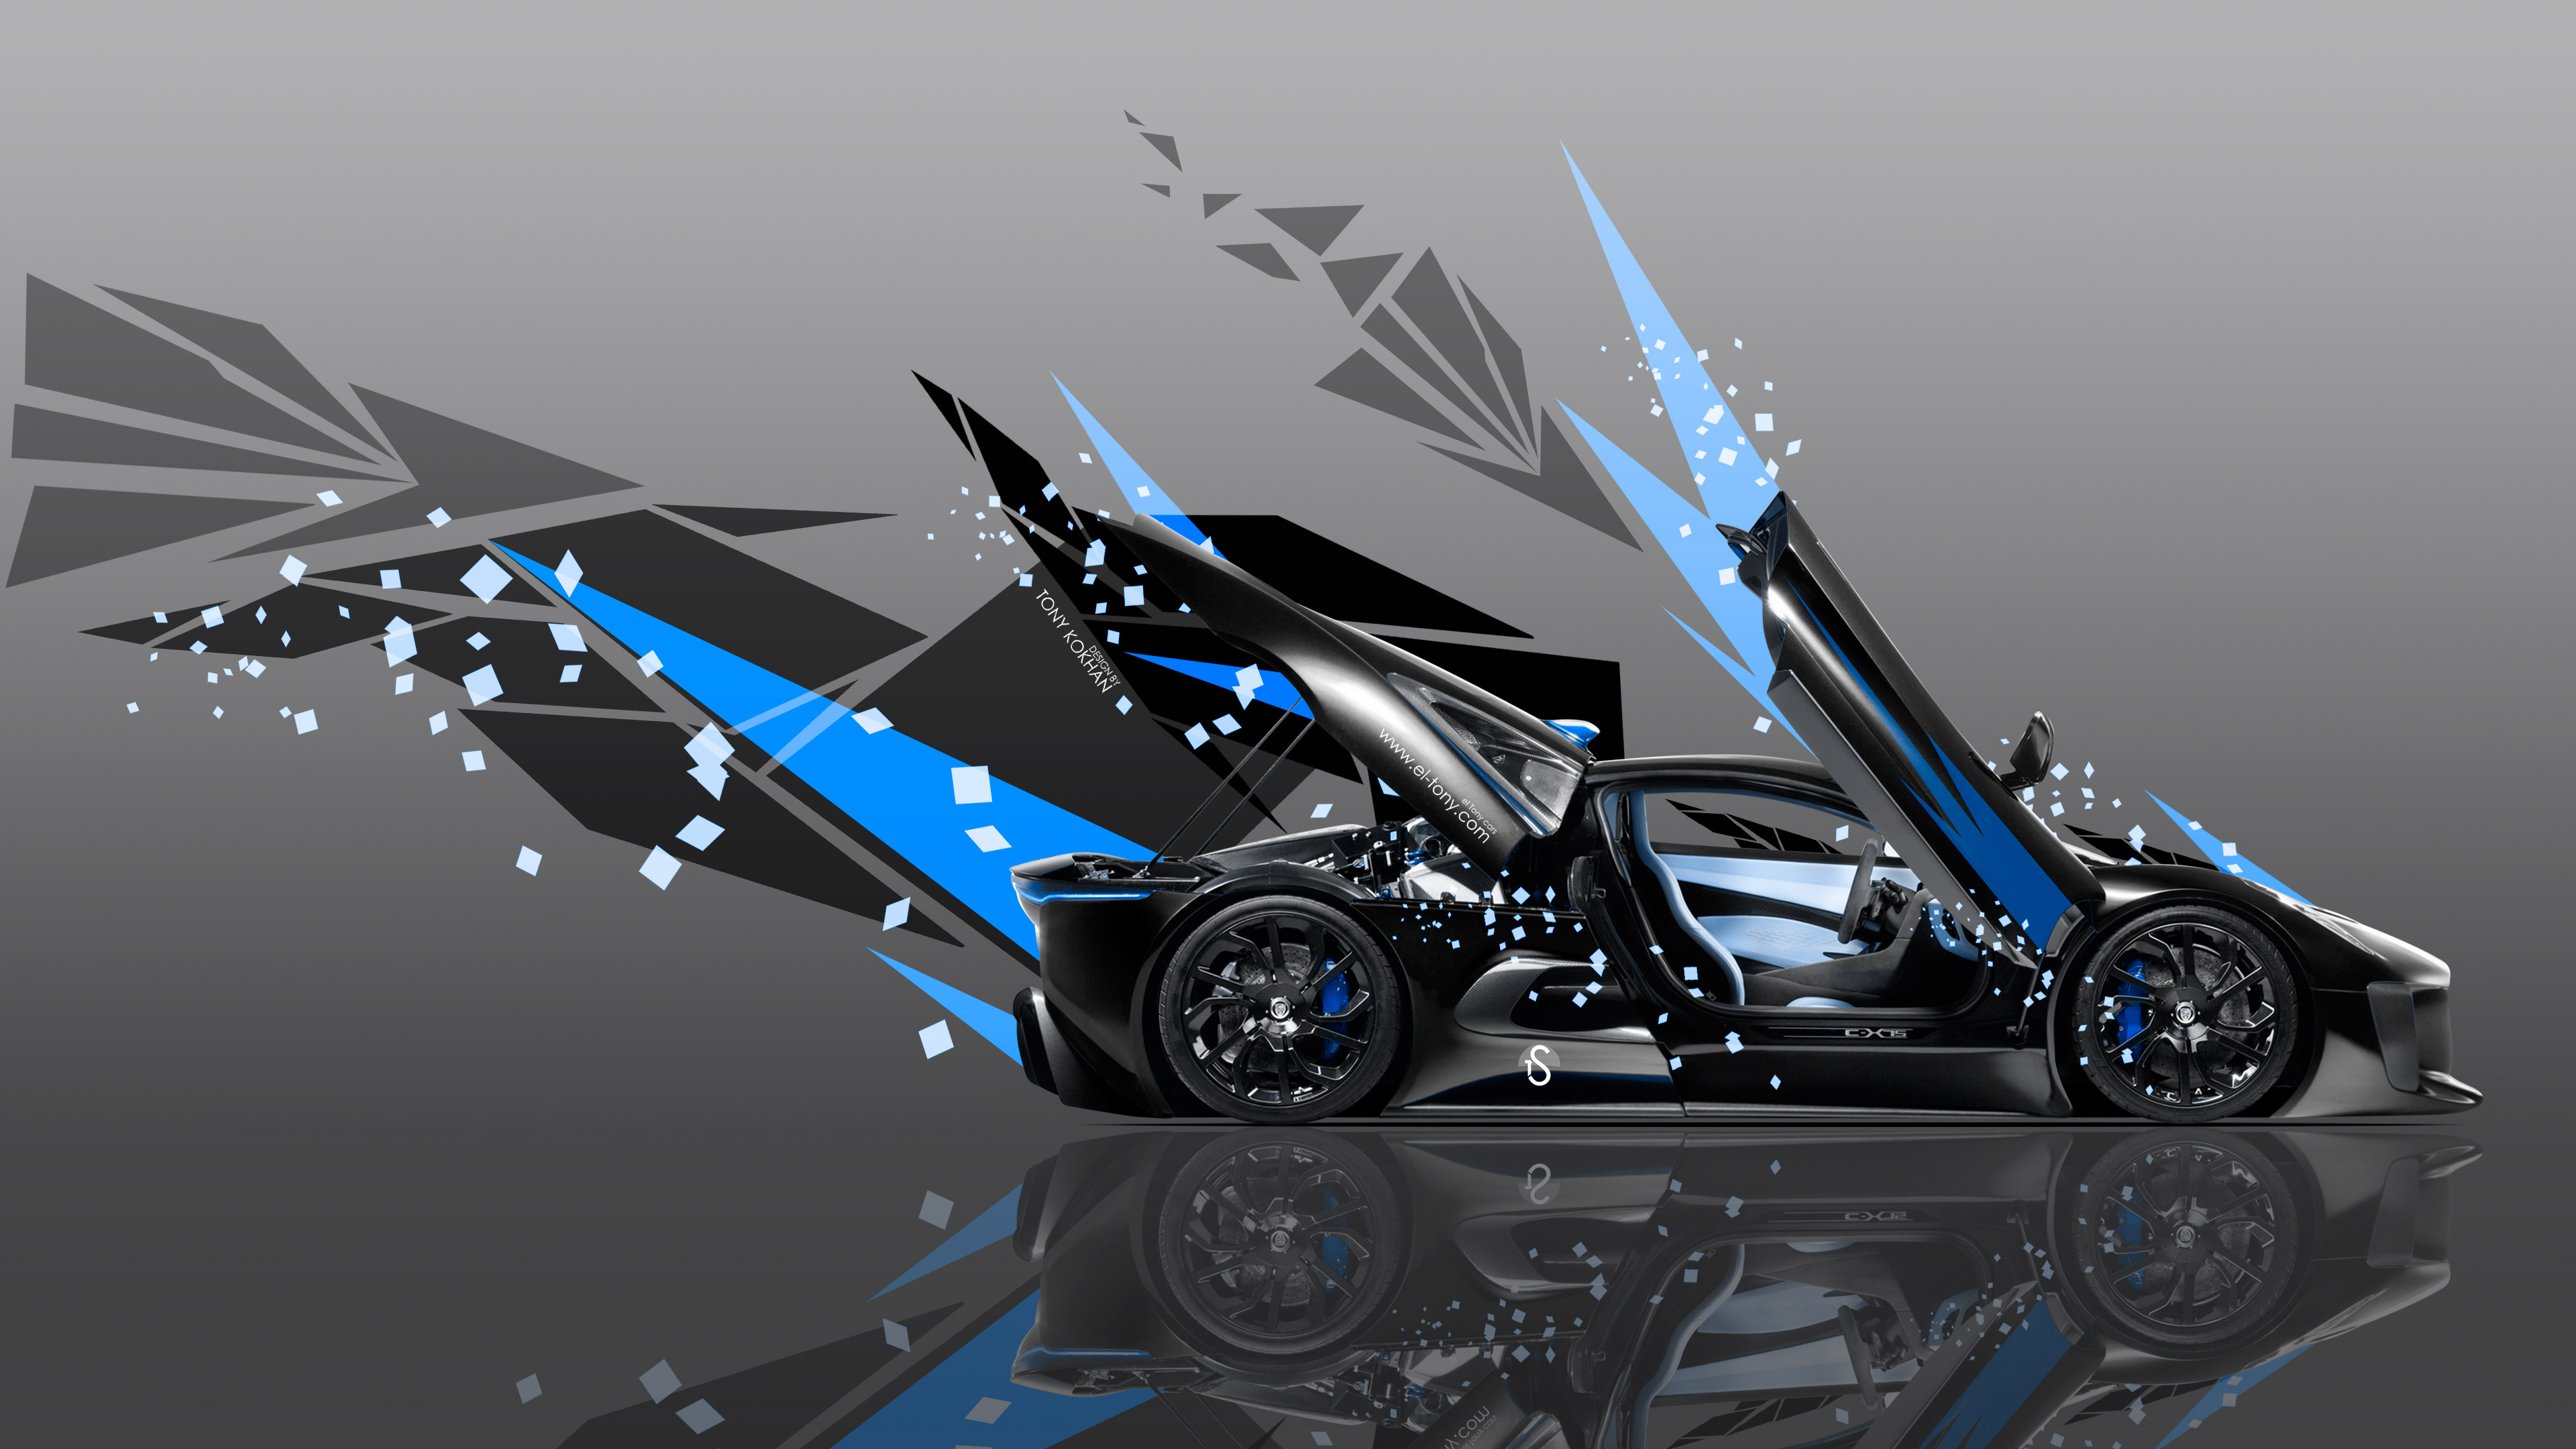 Jaguar-C-X75-Hybrid-Open-Door-Hood-Side-Abstract-Transformer-Car-2014-Art-Blue-Colors-4K-Wallpapers-design-by-Tony-Kokhan-www.el-tony.com_.jpg